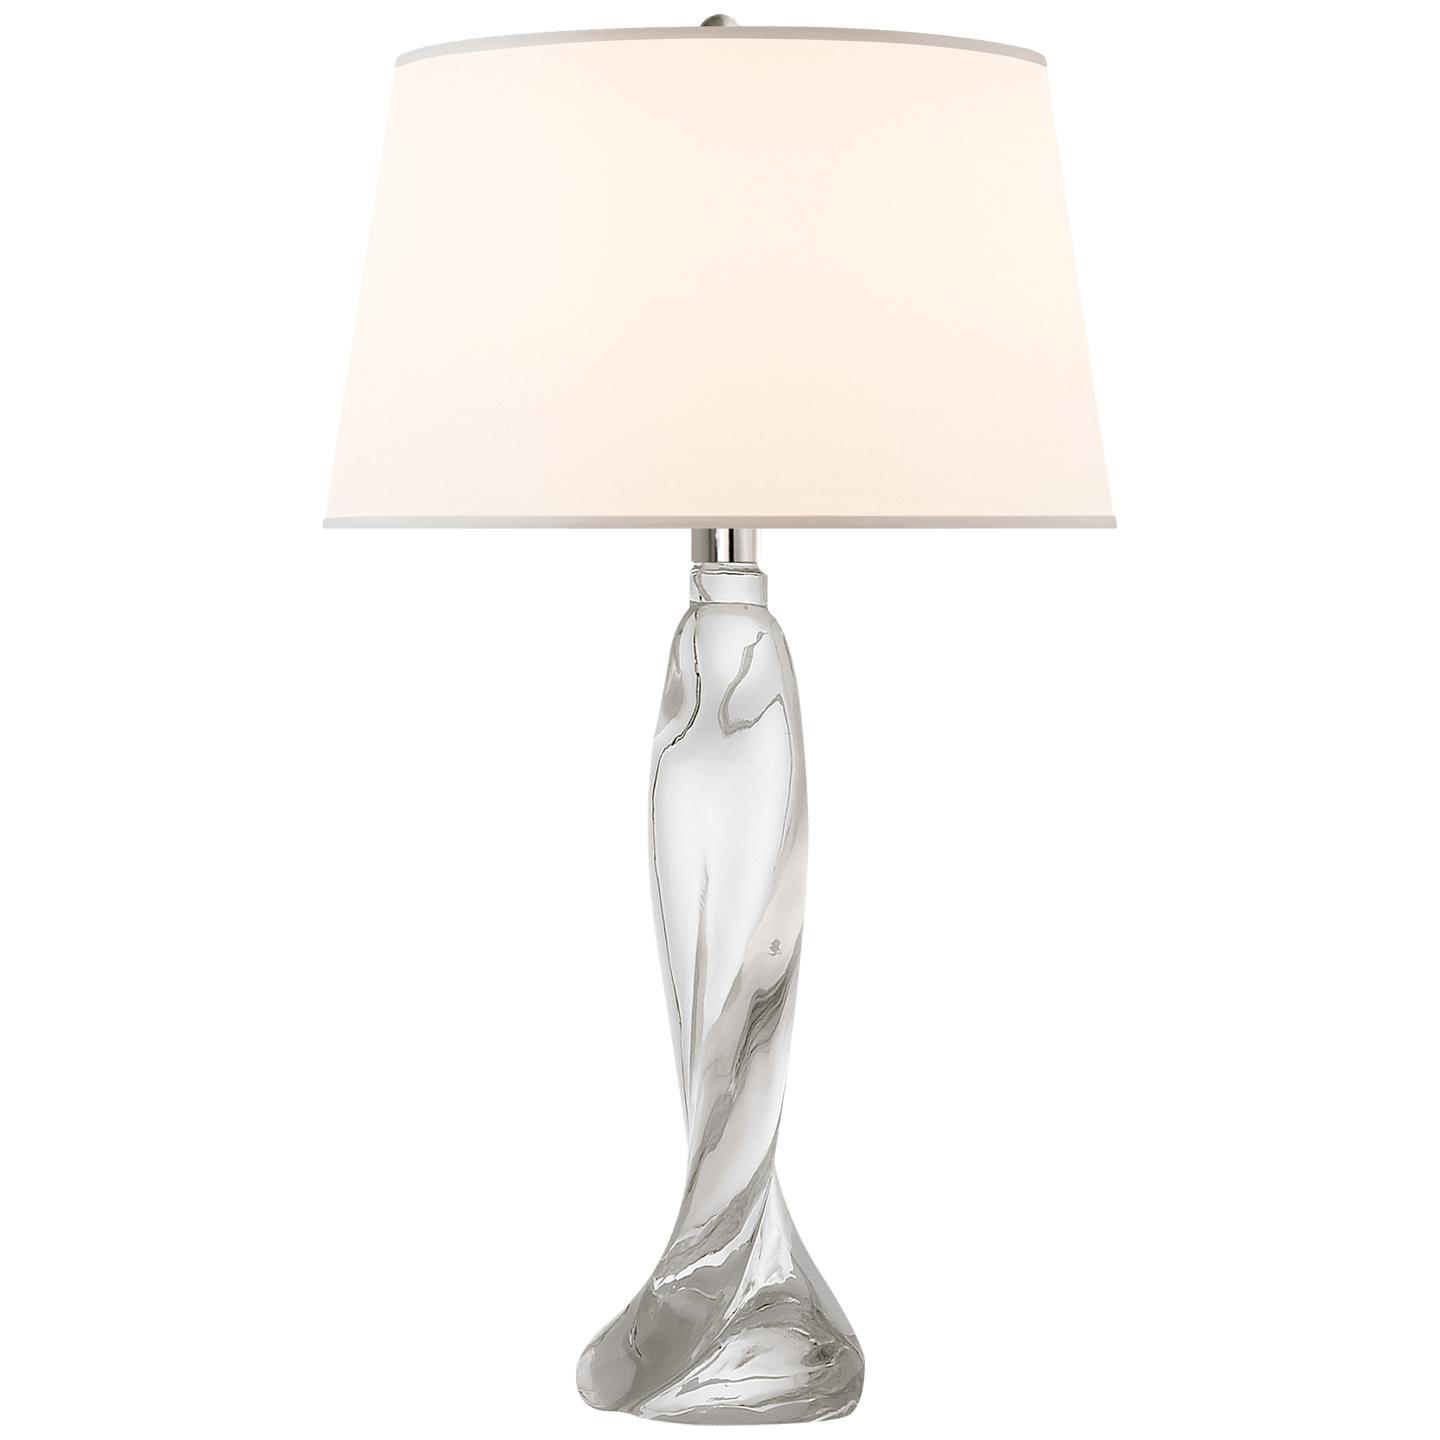 Купить Настольная лампа Chloe Tall Table Lamp в интернет-магазине roooms.ru